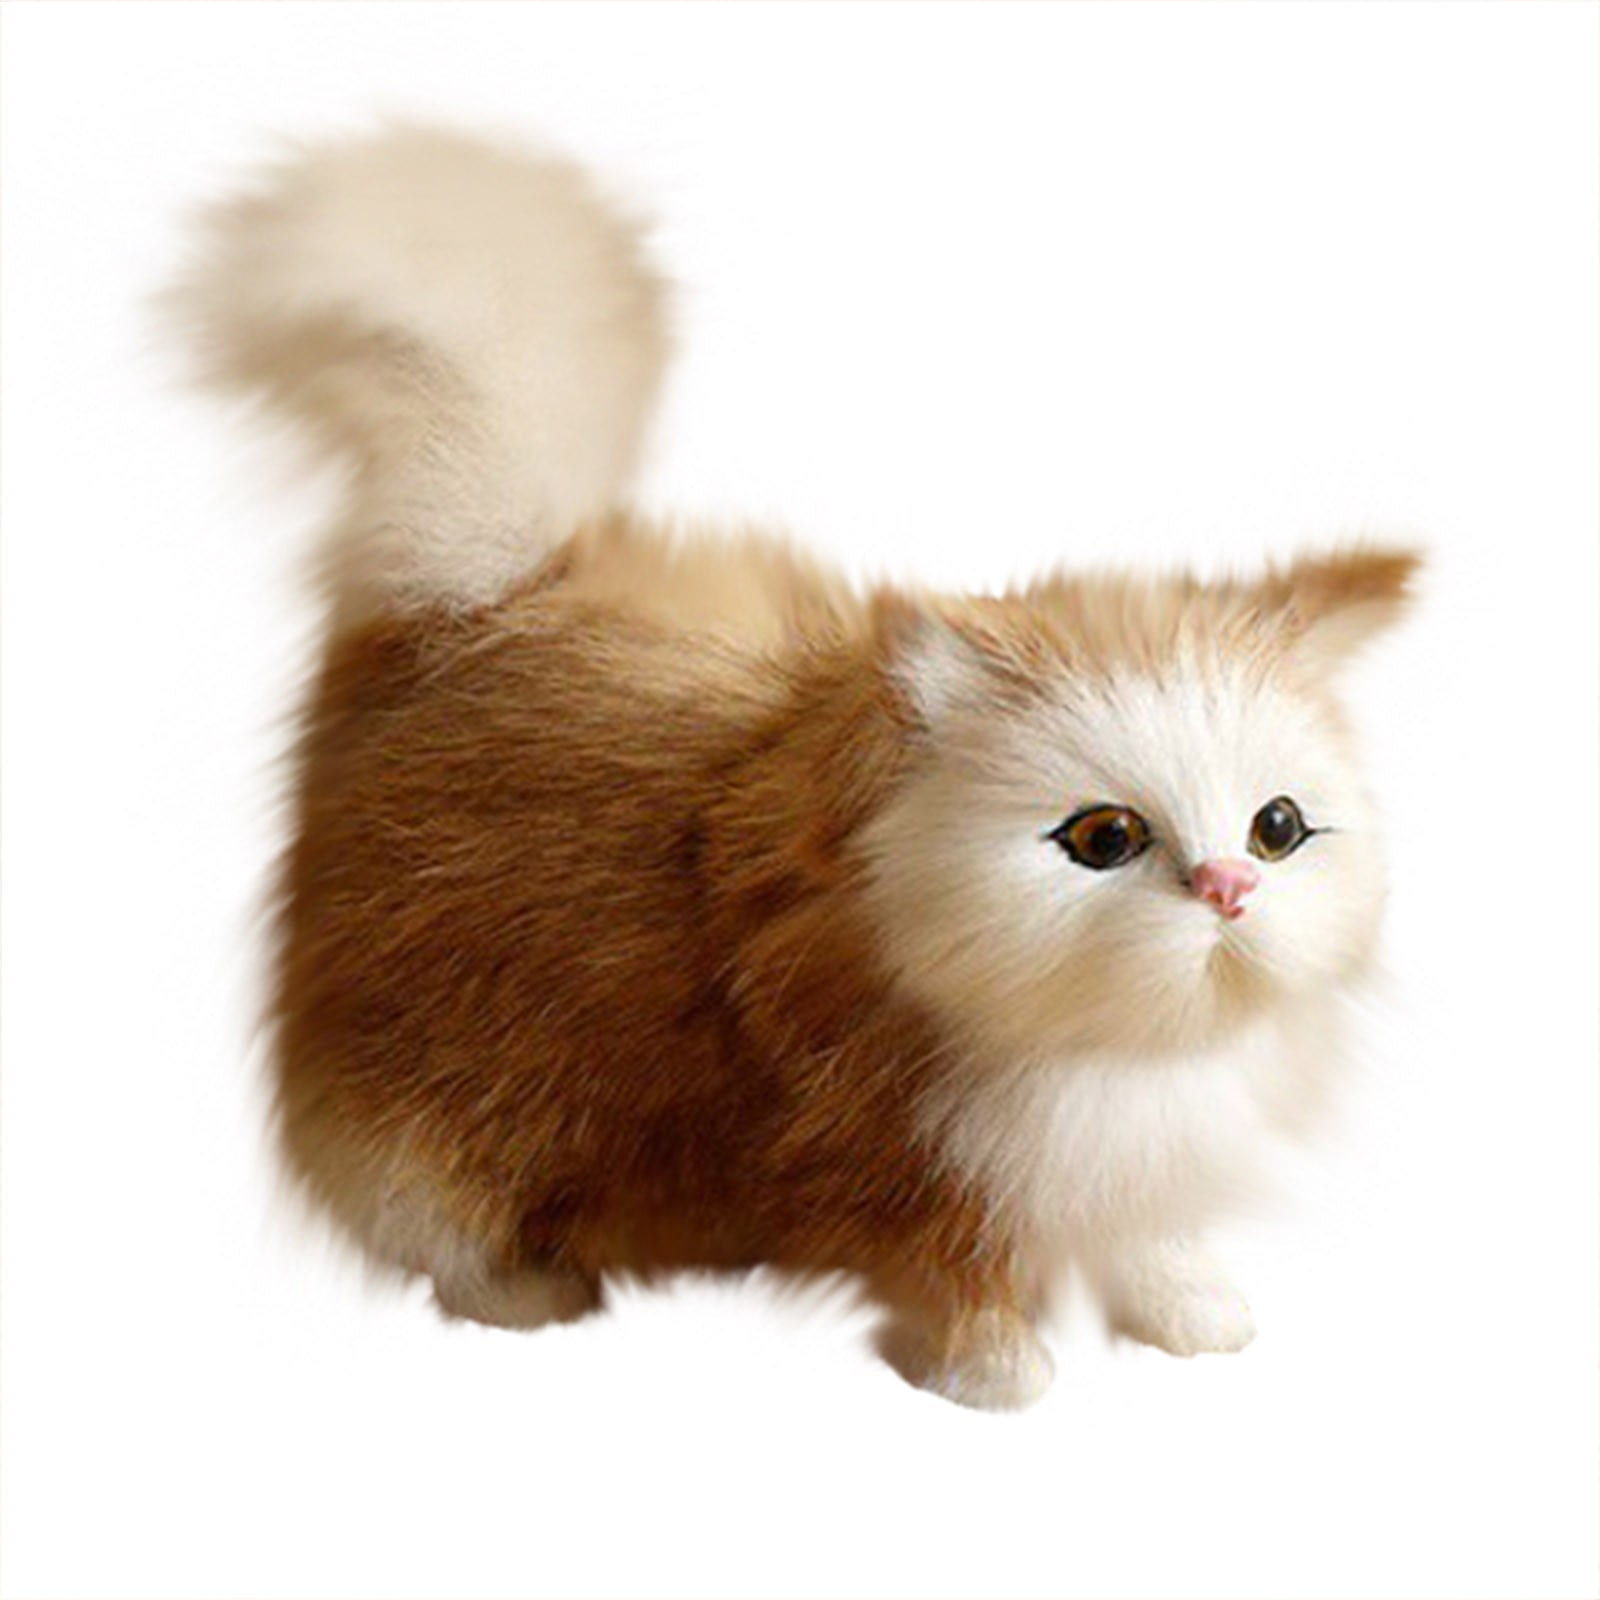 Cute Lovely Simulation Doll Lifelike Cat Plush Animal Toy Kids Girls Gifts NEW 